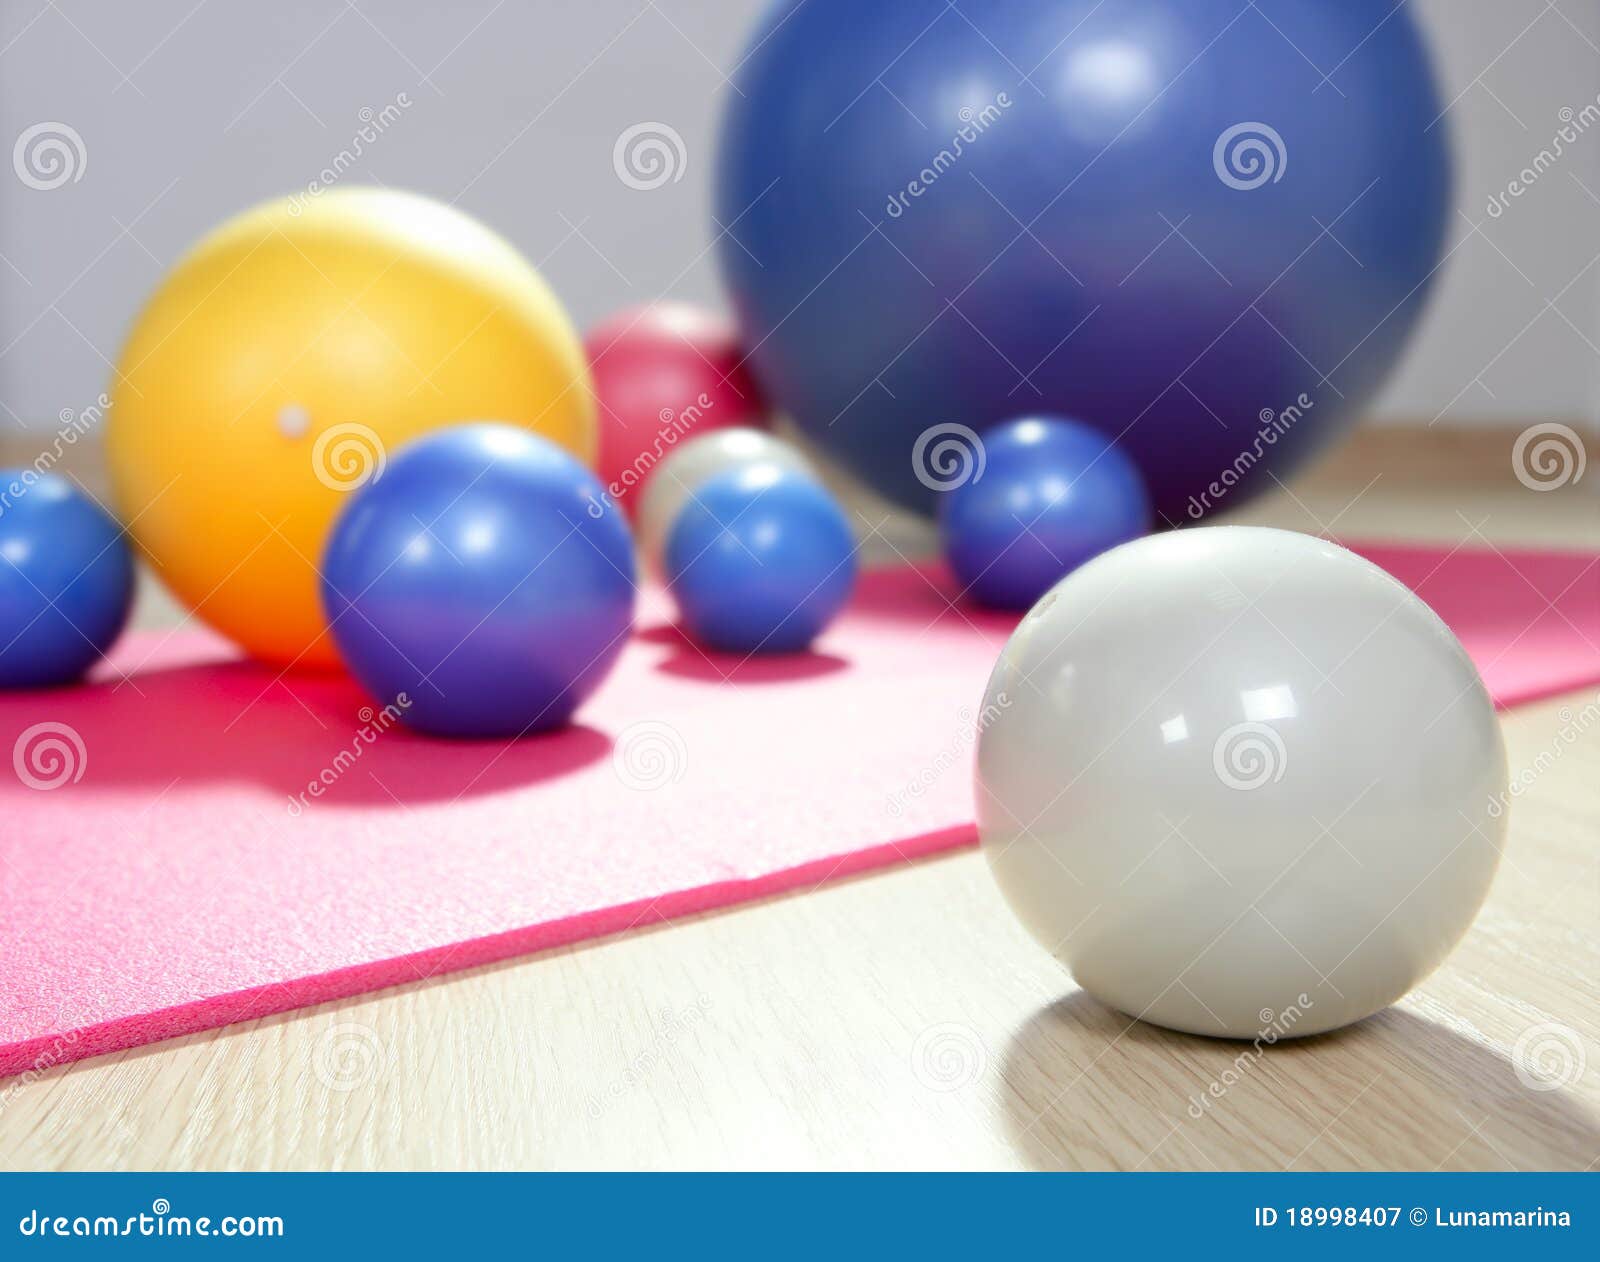 balls toning pilates sport gym yoga mat